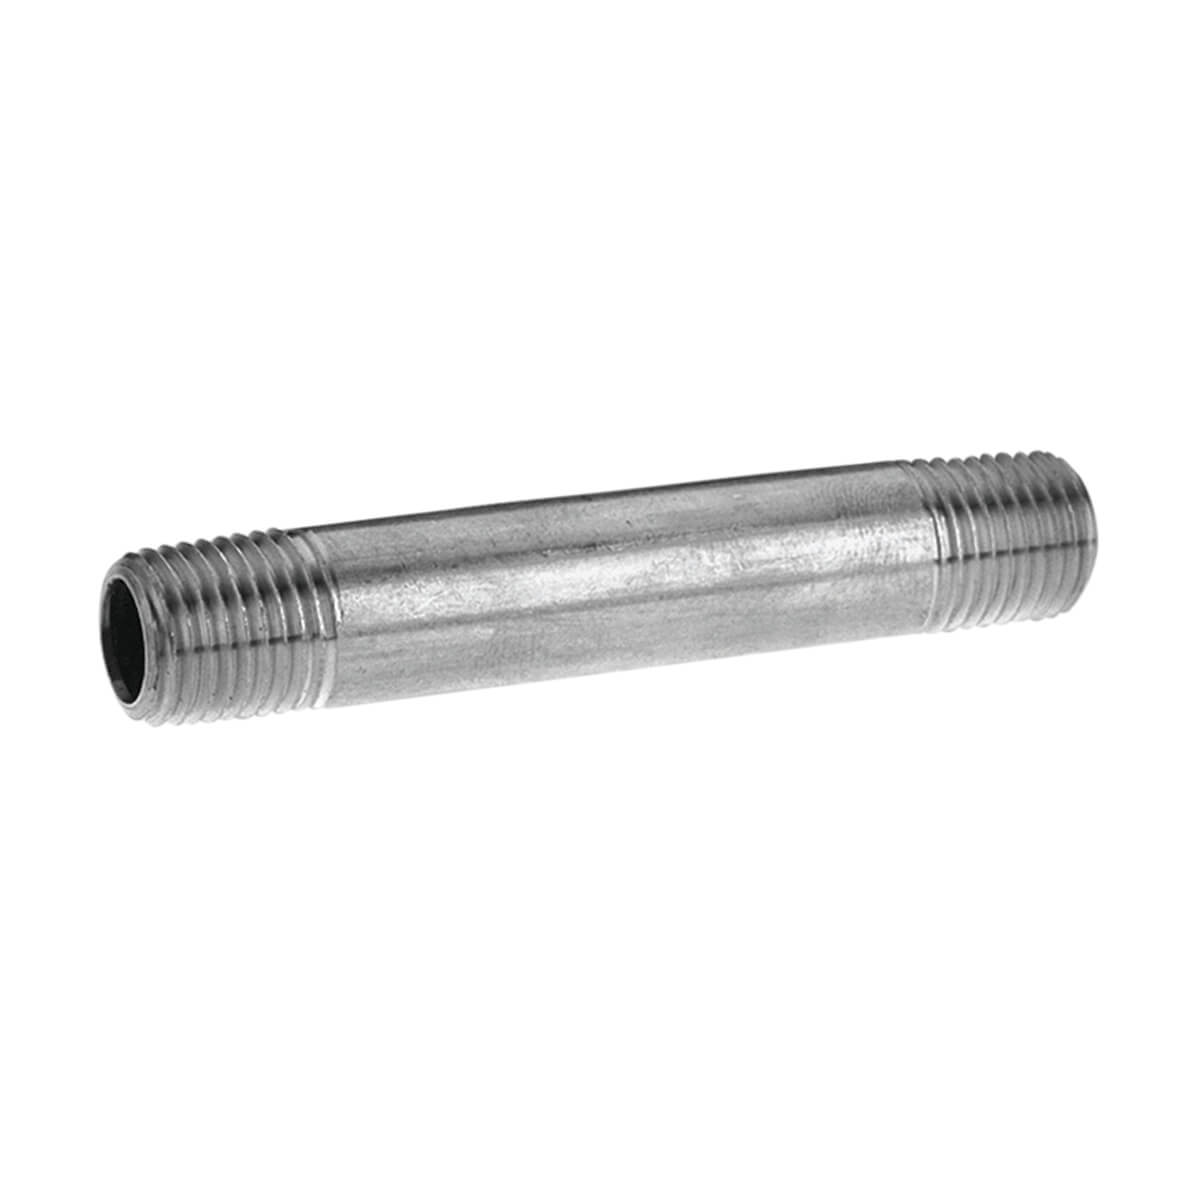 Pipe Nipple Galvanized Steel - 1-1/2-in x 5-in